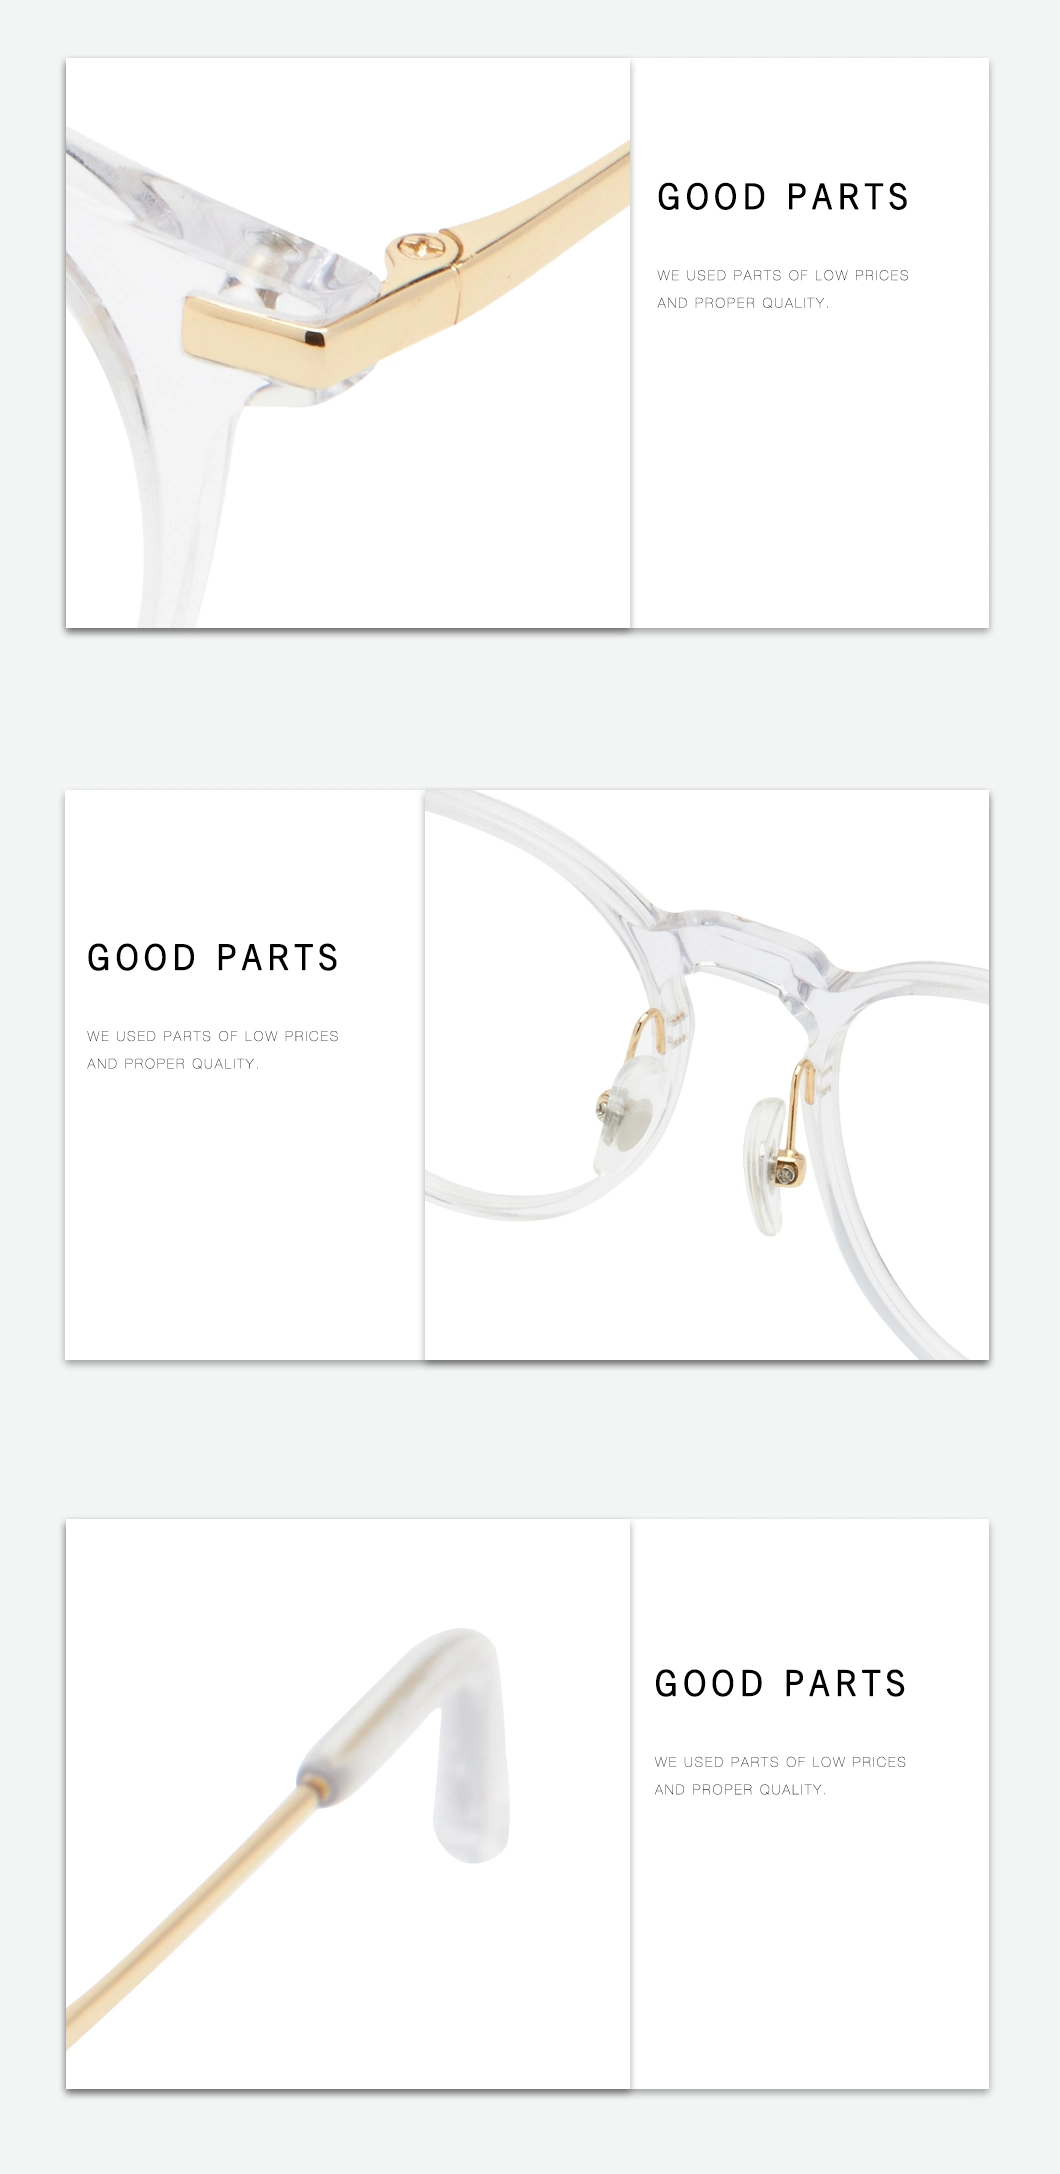 Fashion Optical Eye Glasses Frame, Acetate&Metal Reading Eyeglasses